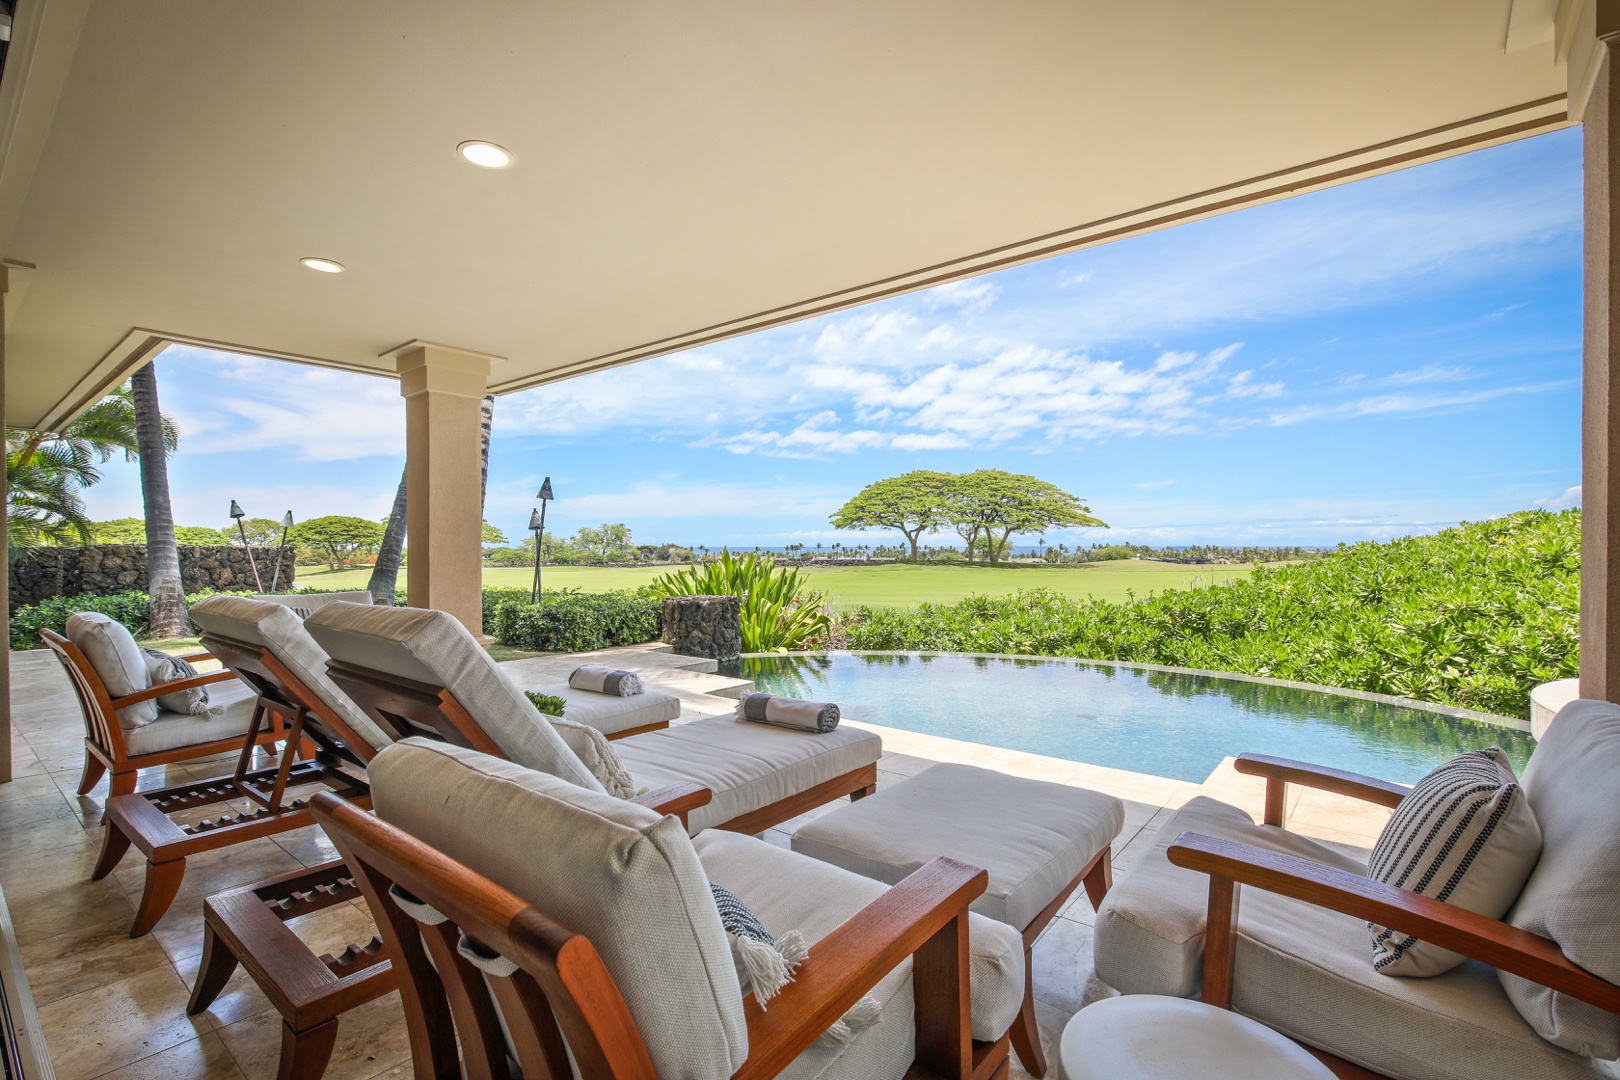 Kailua Kona Vacation Rentals, 4BD Pakui Street (147) Estate Home at Four Seasons Resort at Hualalai - Sit back, relax and enjoy the view.